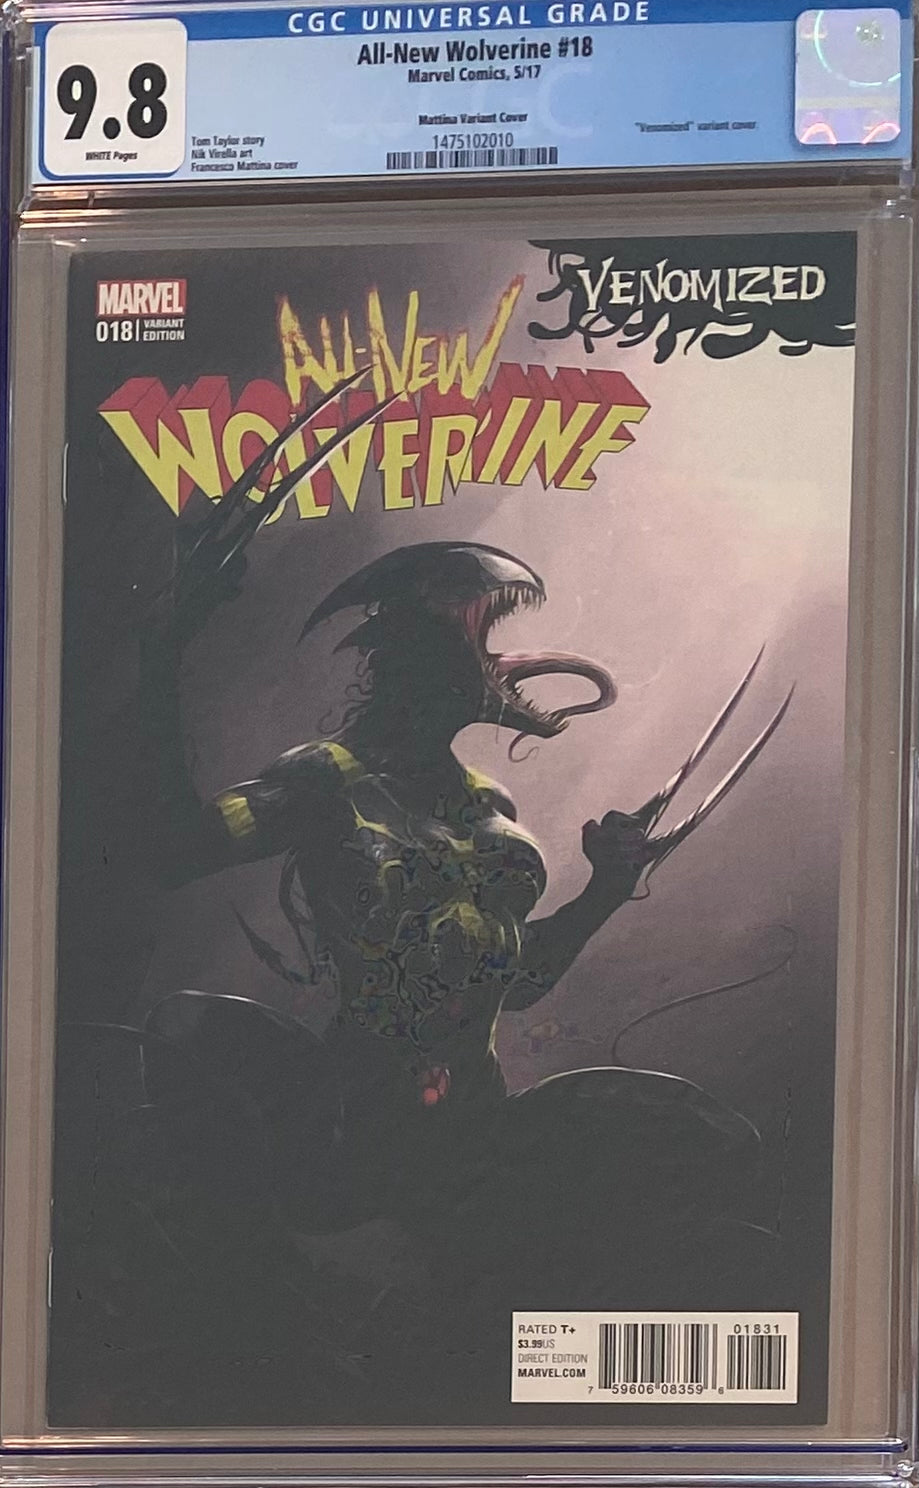 All-New Wolverine #18 Mattina Venomized Variant CGC 9.8